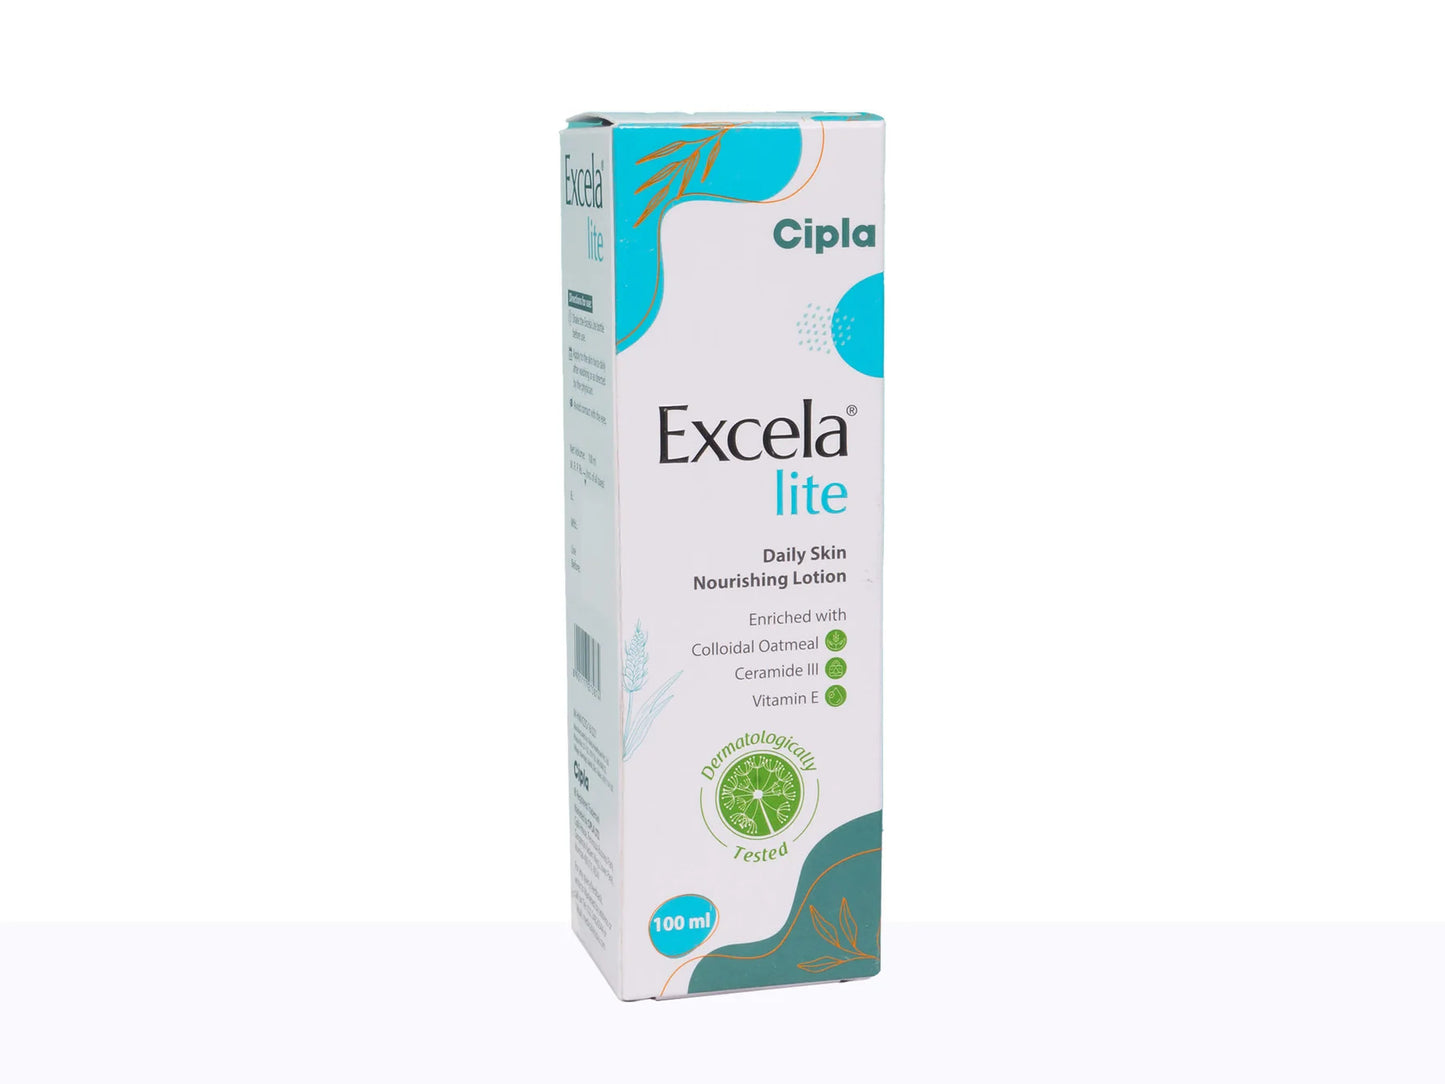 Excela Lite Daily Skin Nourishing Lotion, 100ml